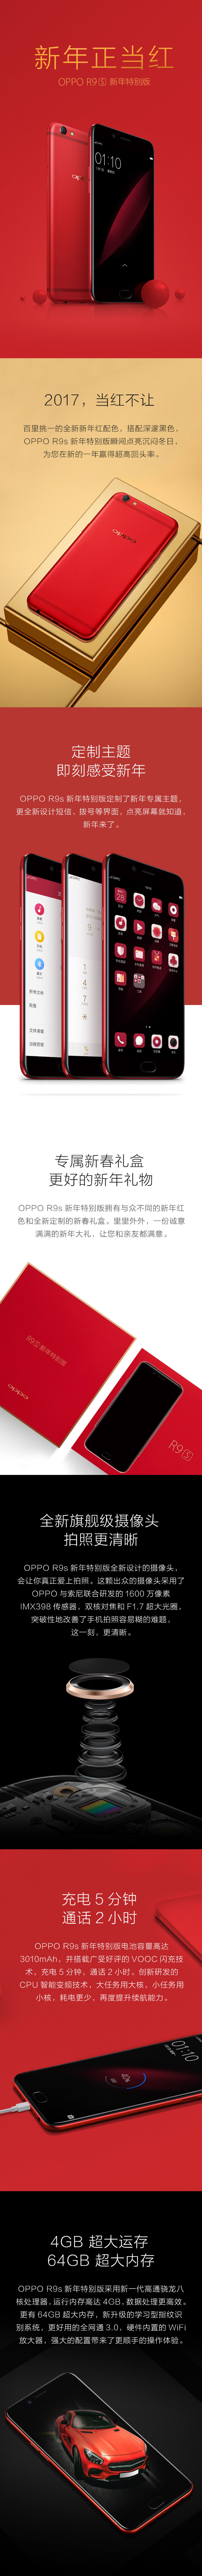 OPPO R9s新年特别版免费试用,评测